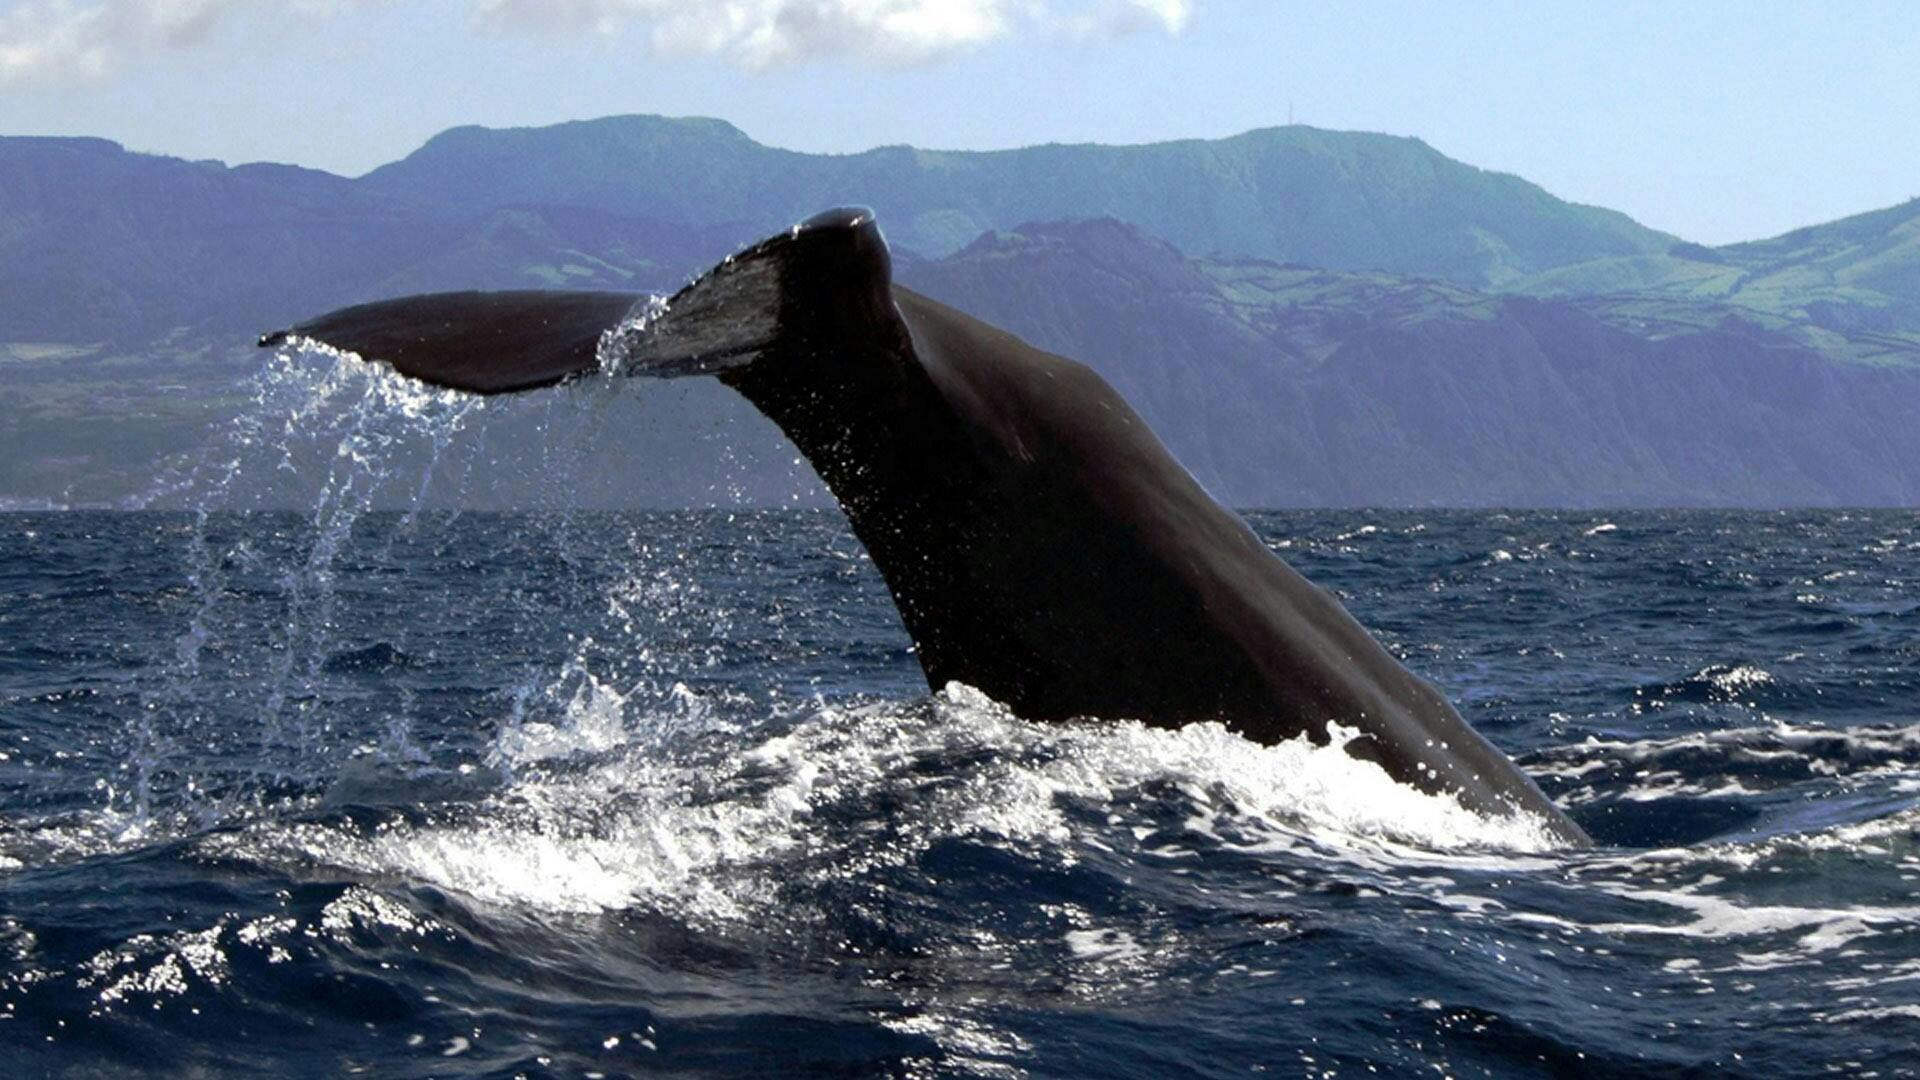 São Miguel Whale Watching & Islet Ticket